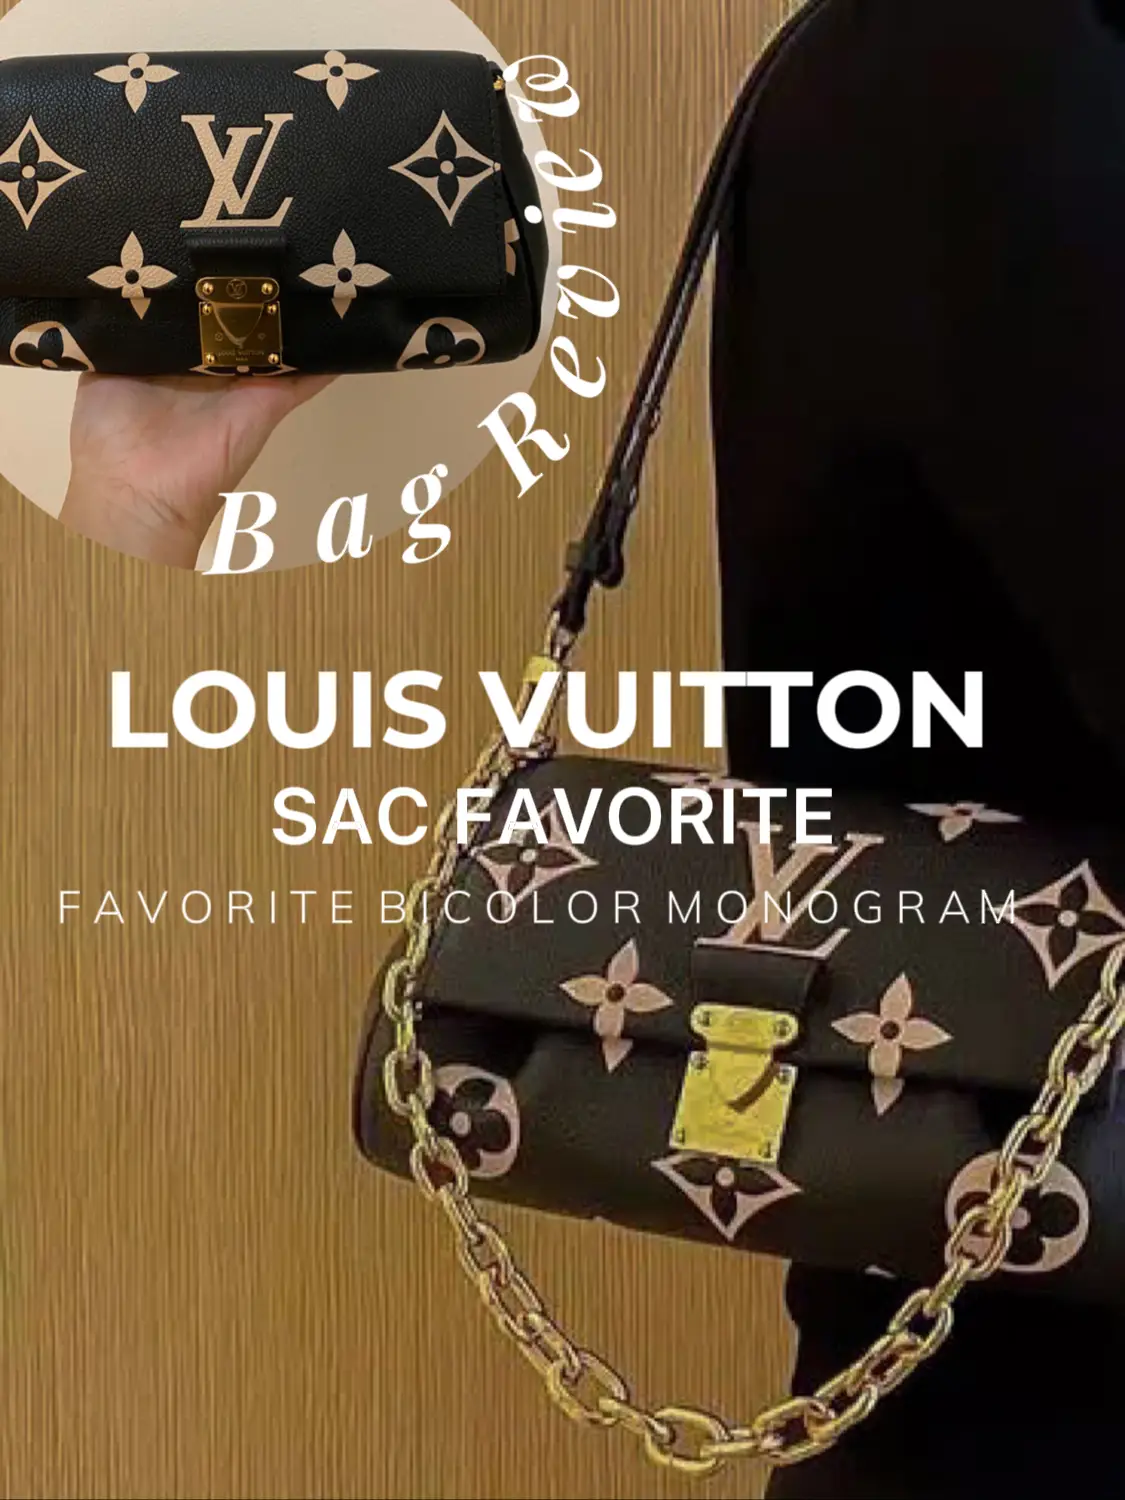 Louis Vuitton ONTHEGO Tote in Monogram Empreinte Leather Honest